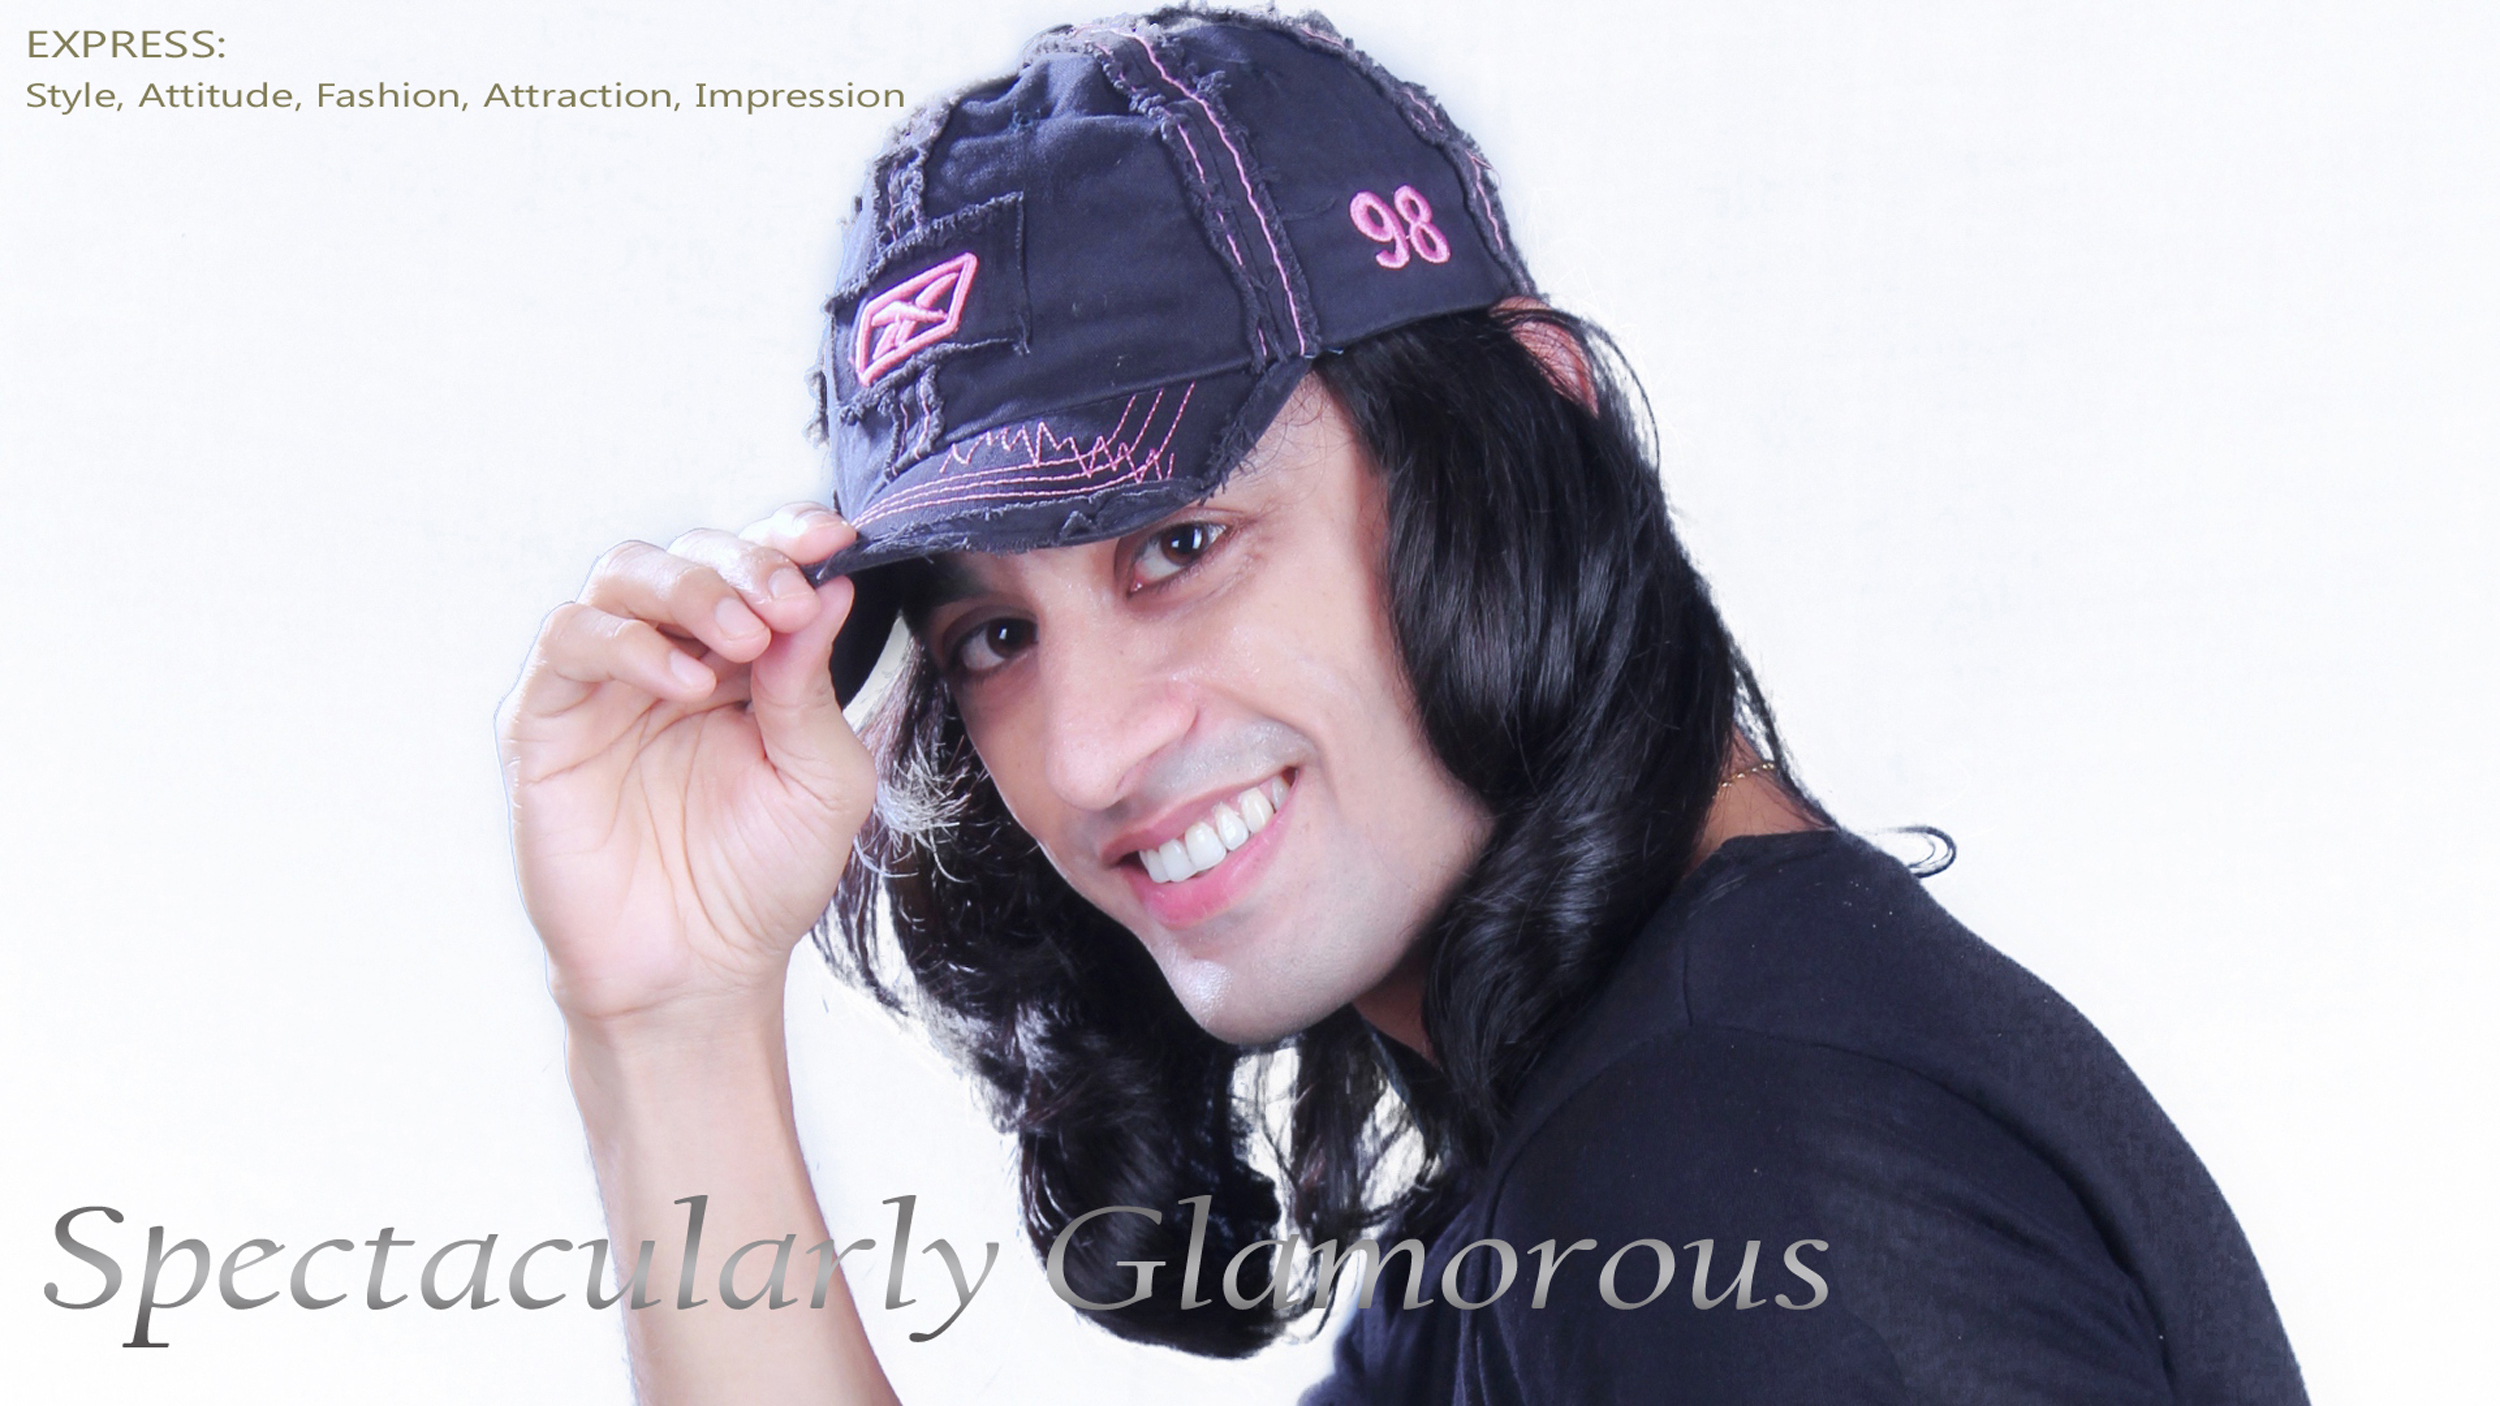 Rajkumar Patra Actor Male Models Fashion Street Style Indian Model Long Hair 2500x1406